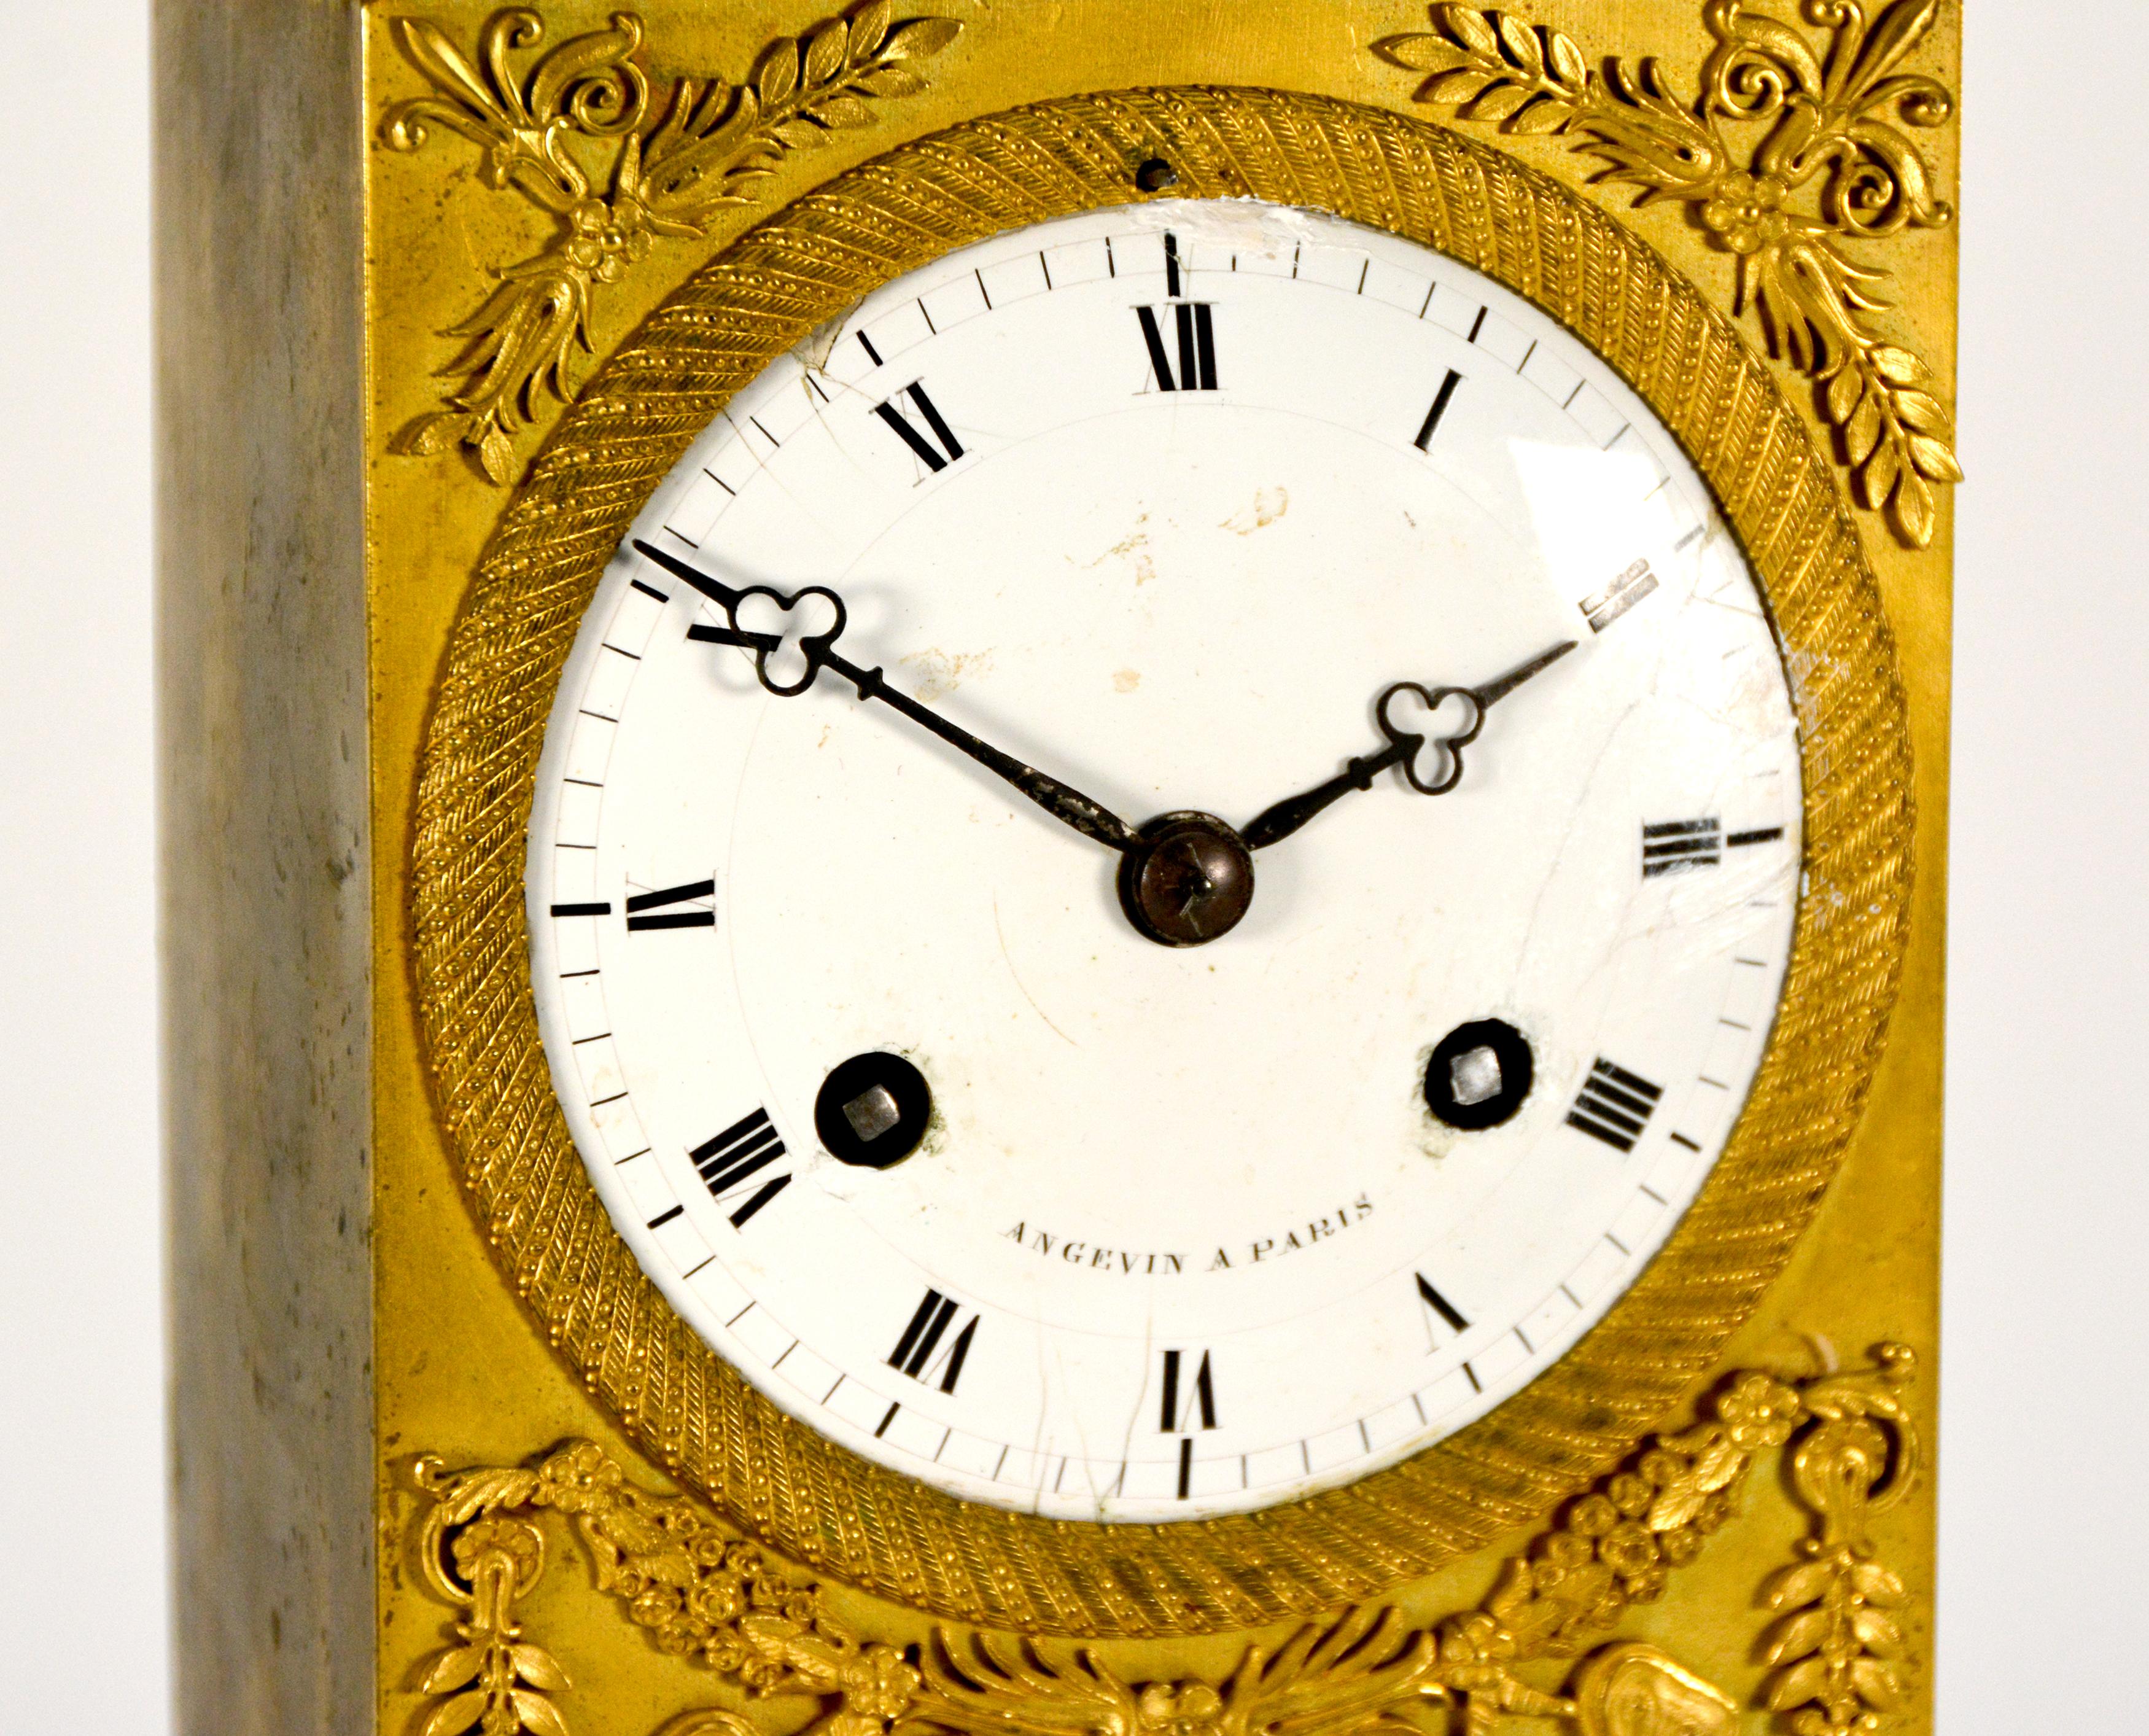 1880 French Silk Suspension Ormolu Empire Bronze Mantel Clock by Angevin A Paris For Sale 6